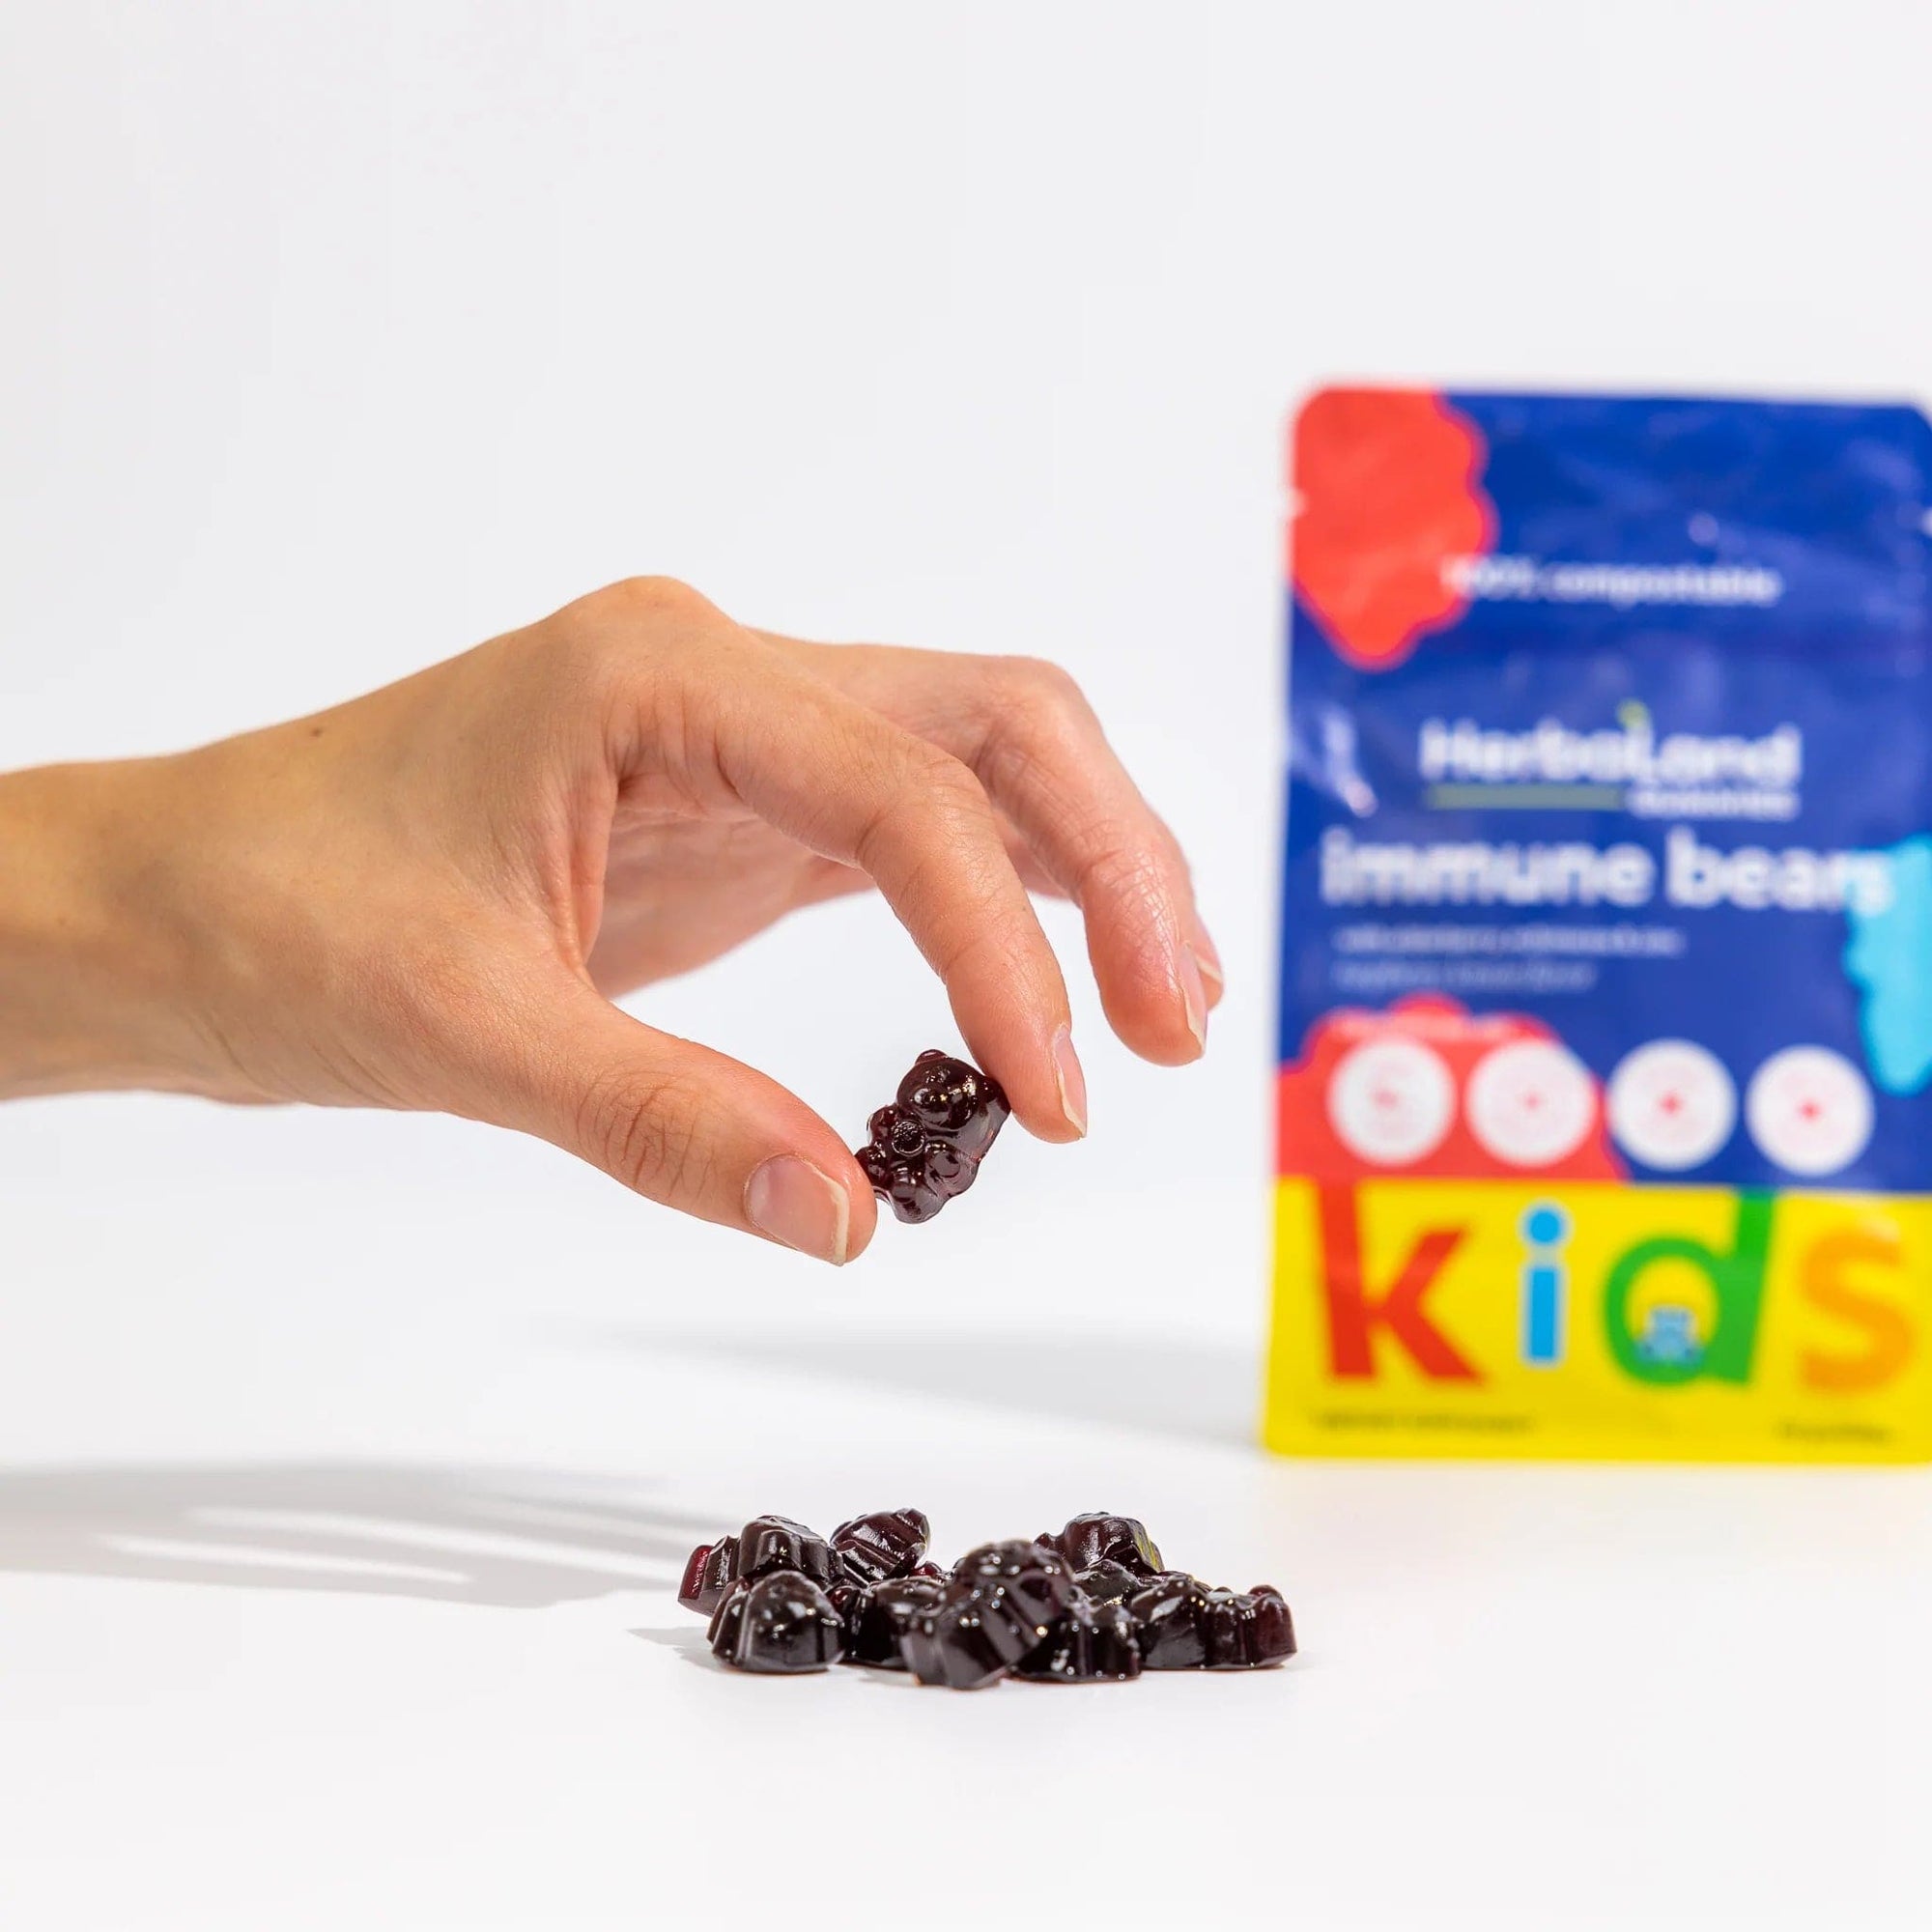 Herbaland Vitamins Herbaland Immune Bear Gummies for Kids